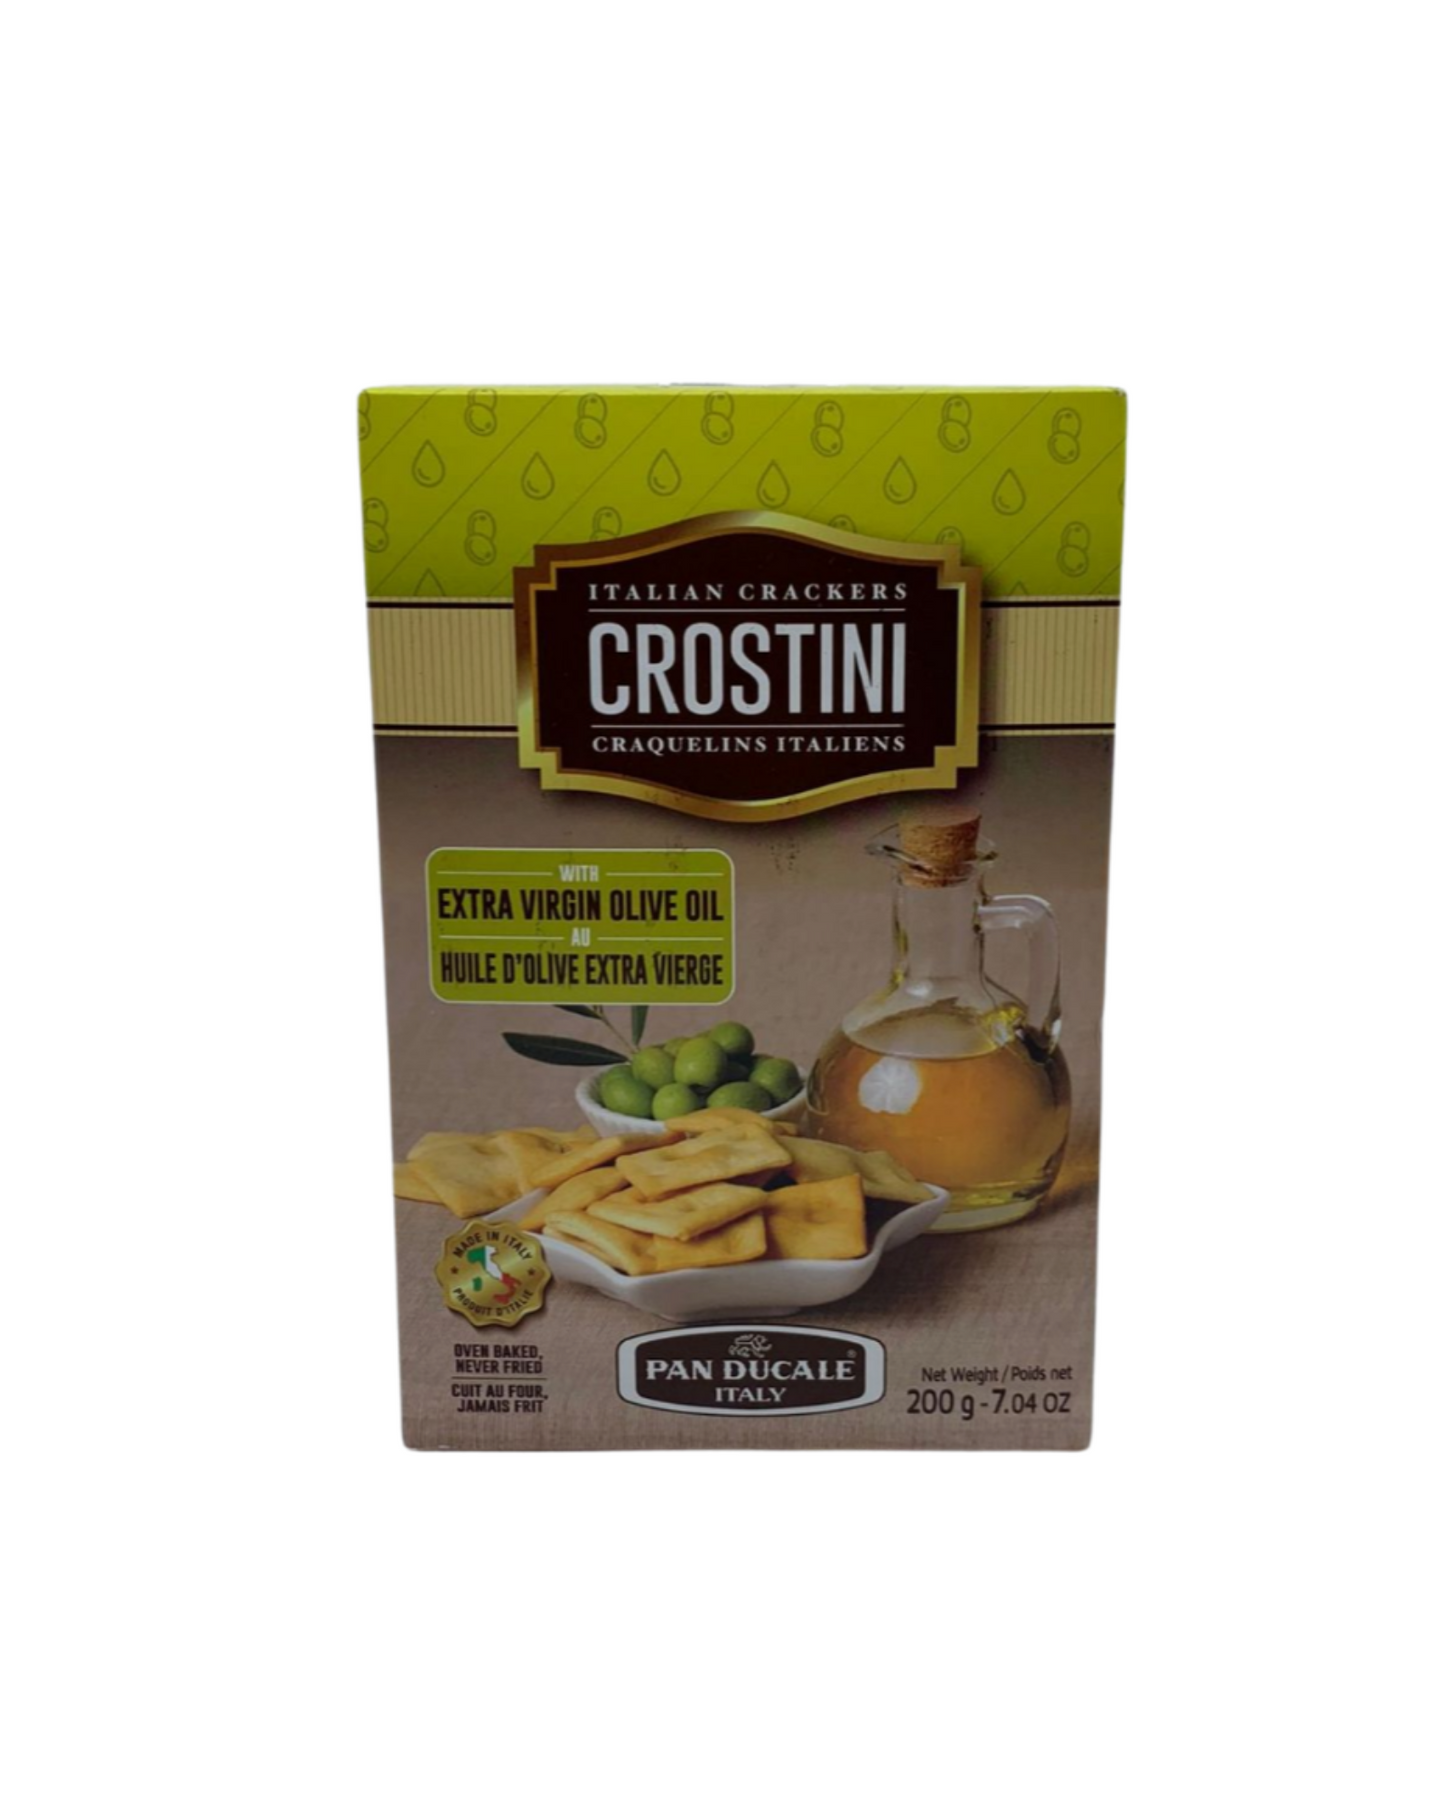 Crostini with EVOO